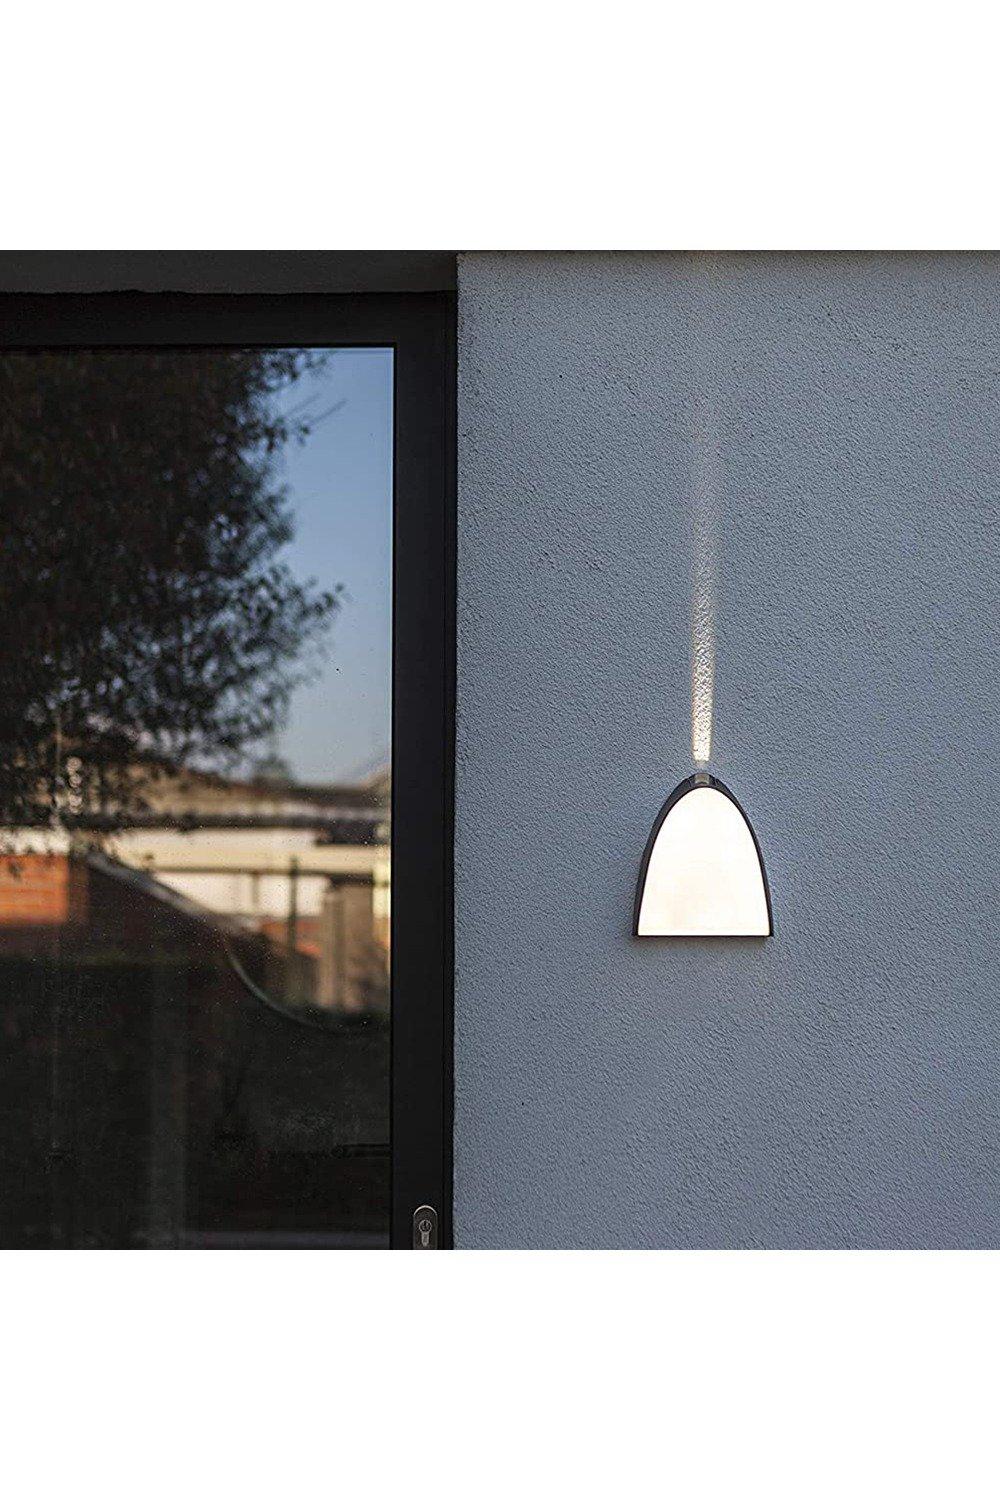 'Miranda' Modern Wedge LED Wall Light With Narrow Up Beam